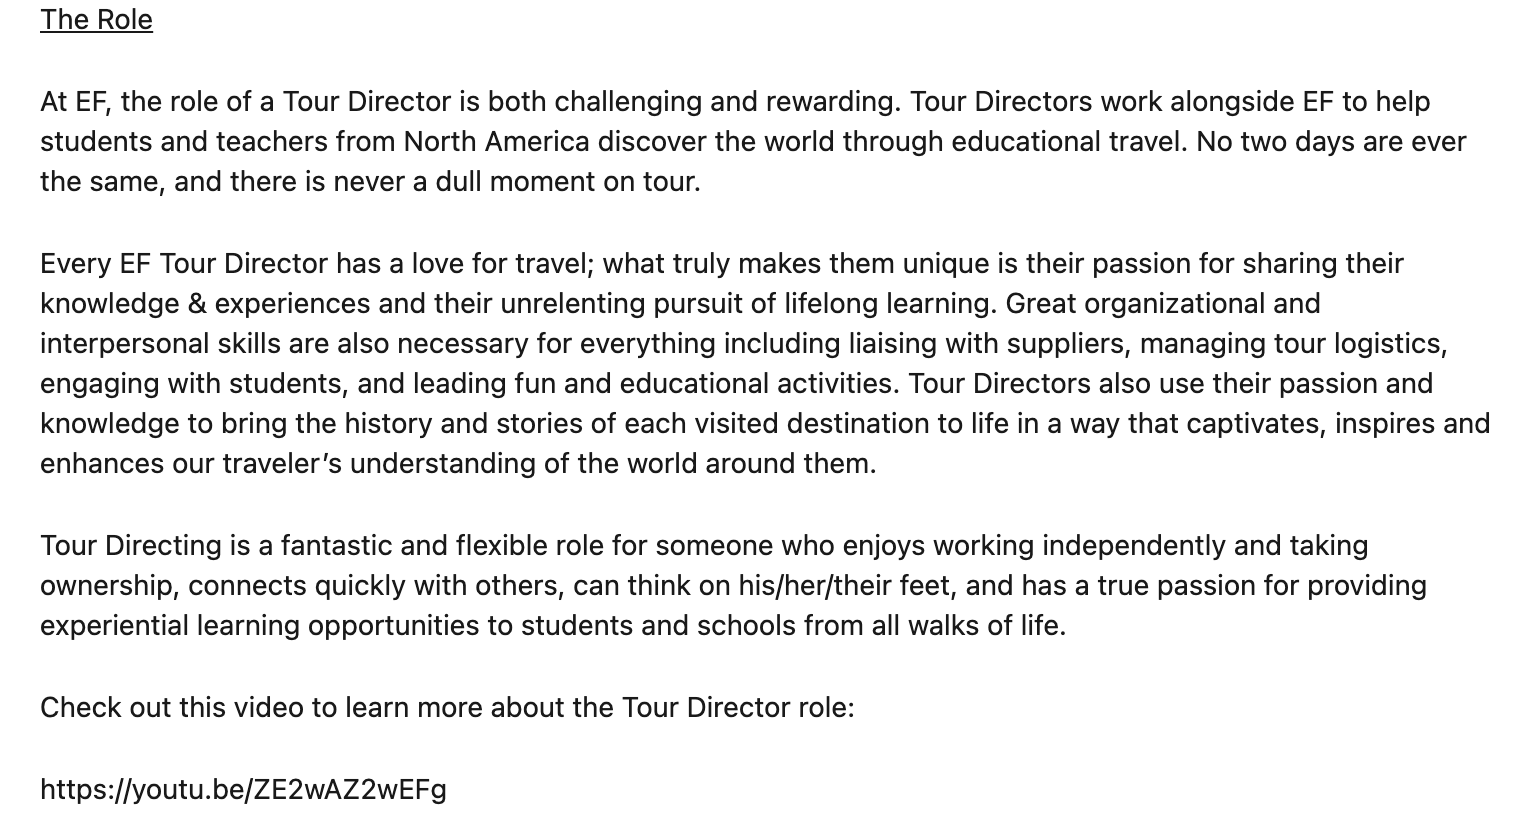 Freelance tour director for EF 2 